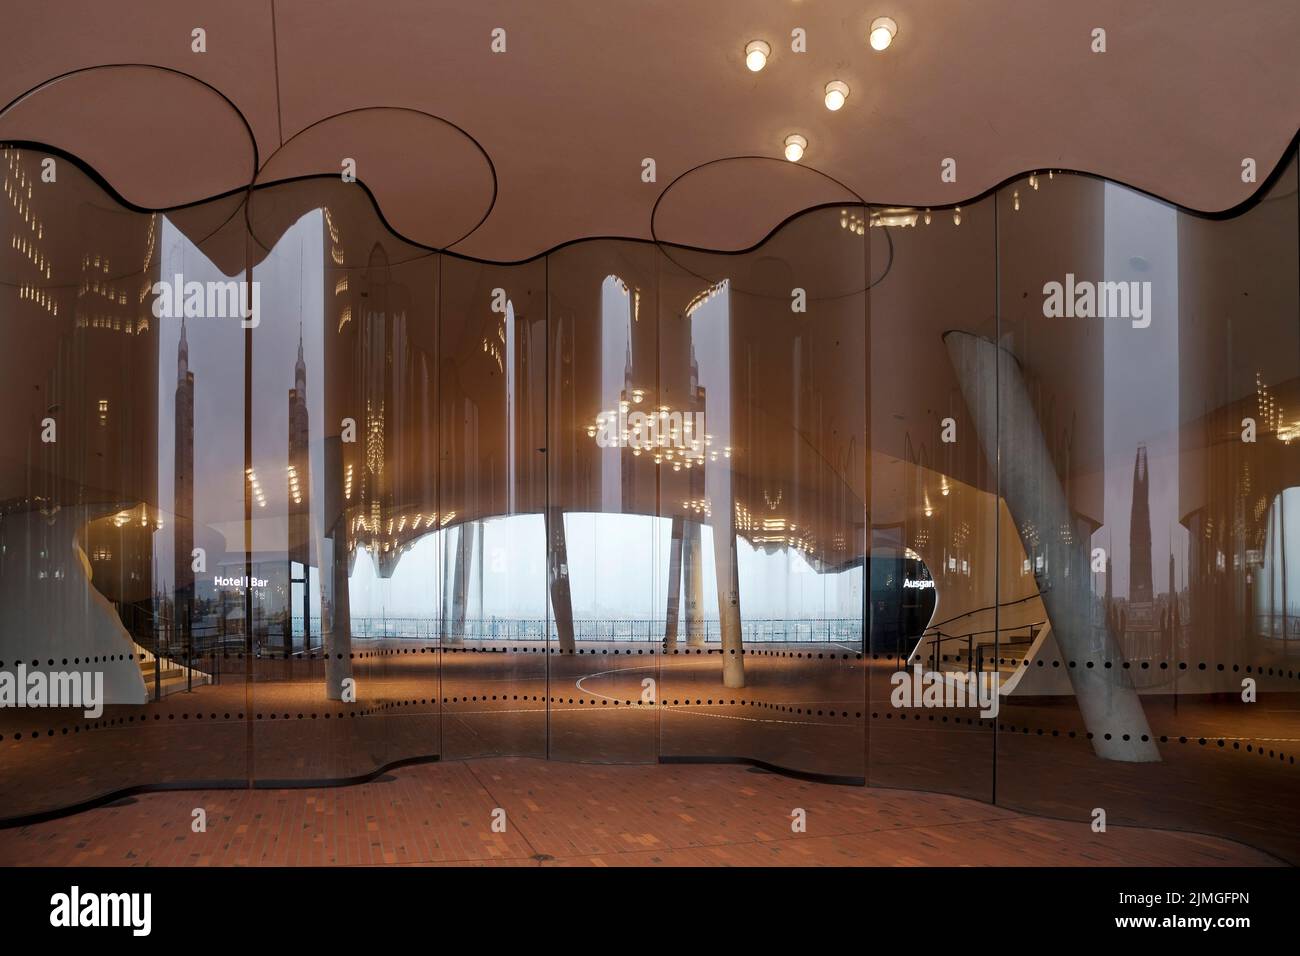 Plaza public viewing platform with curved glass wind deflectors, Elbphilharmonie, Hamburg, Germany Stock Photo